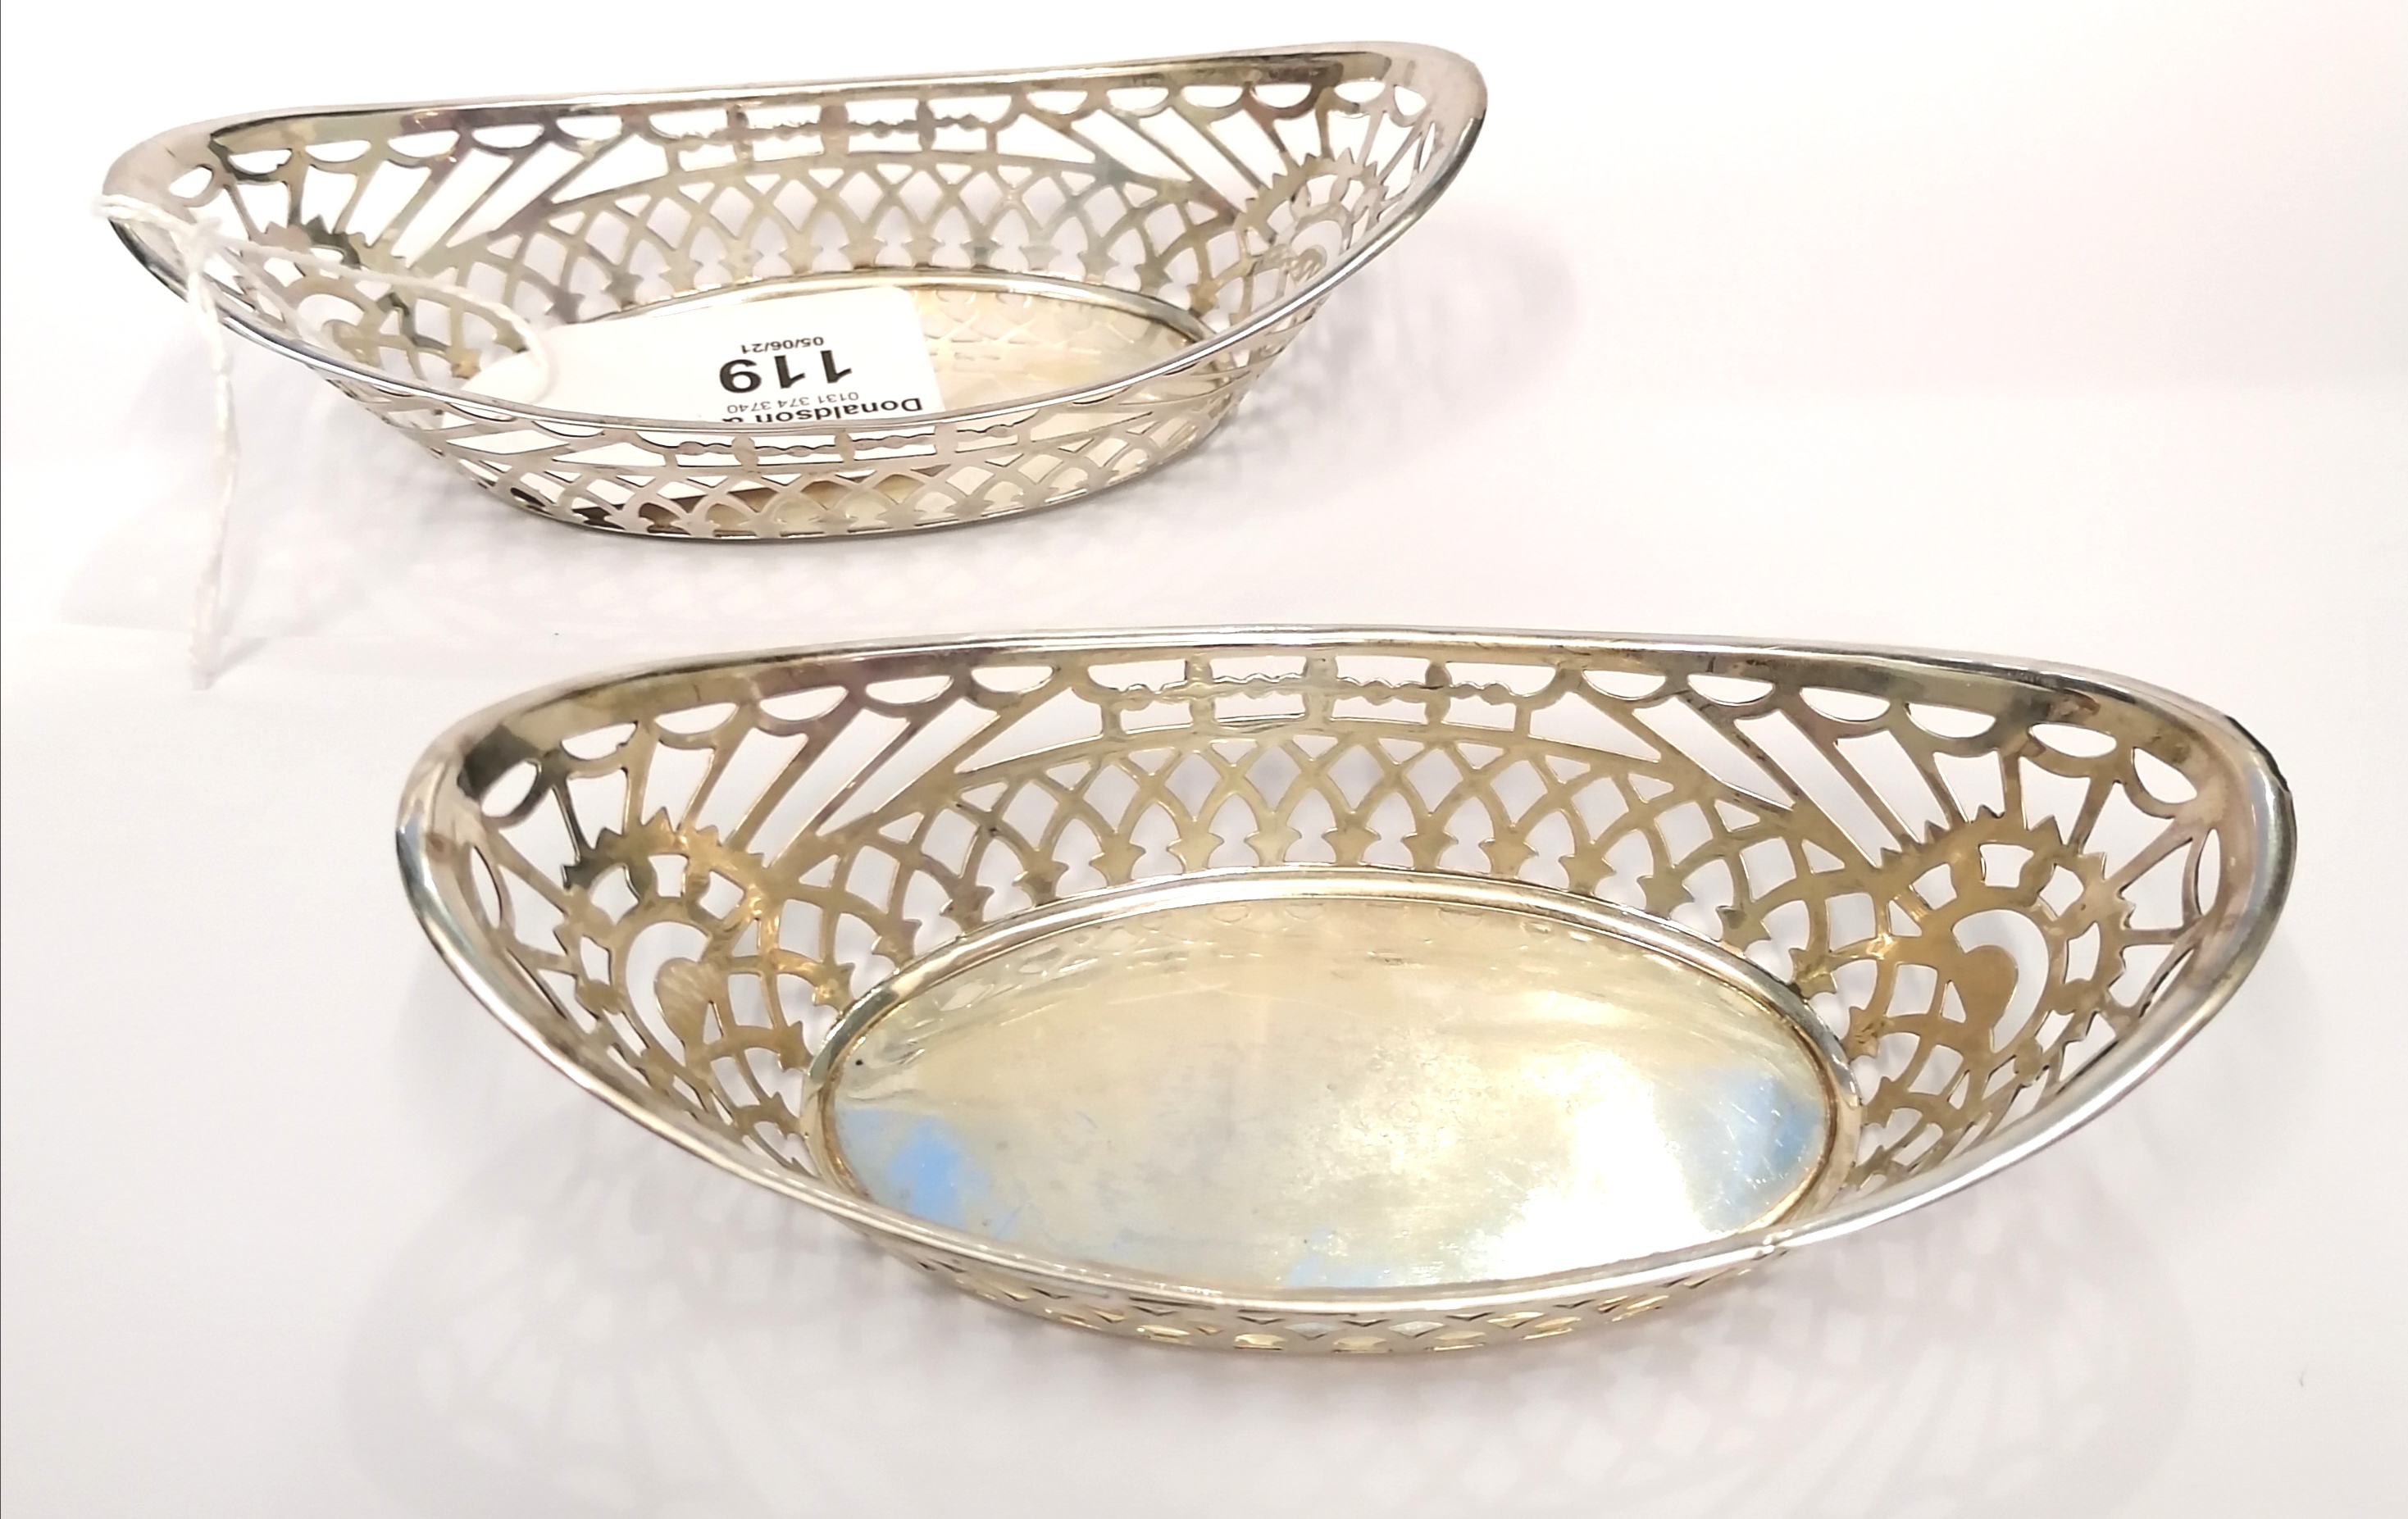 Pair of Edwardian silver sweetmeat baskets by Levi & Salaman, Birmingham 1907.